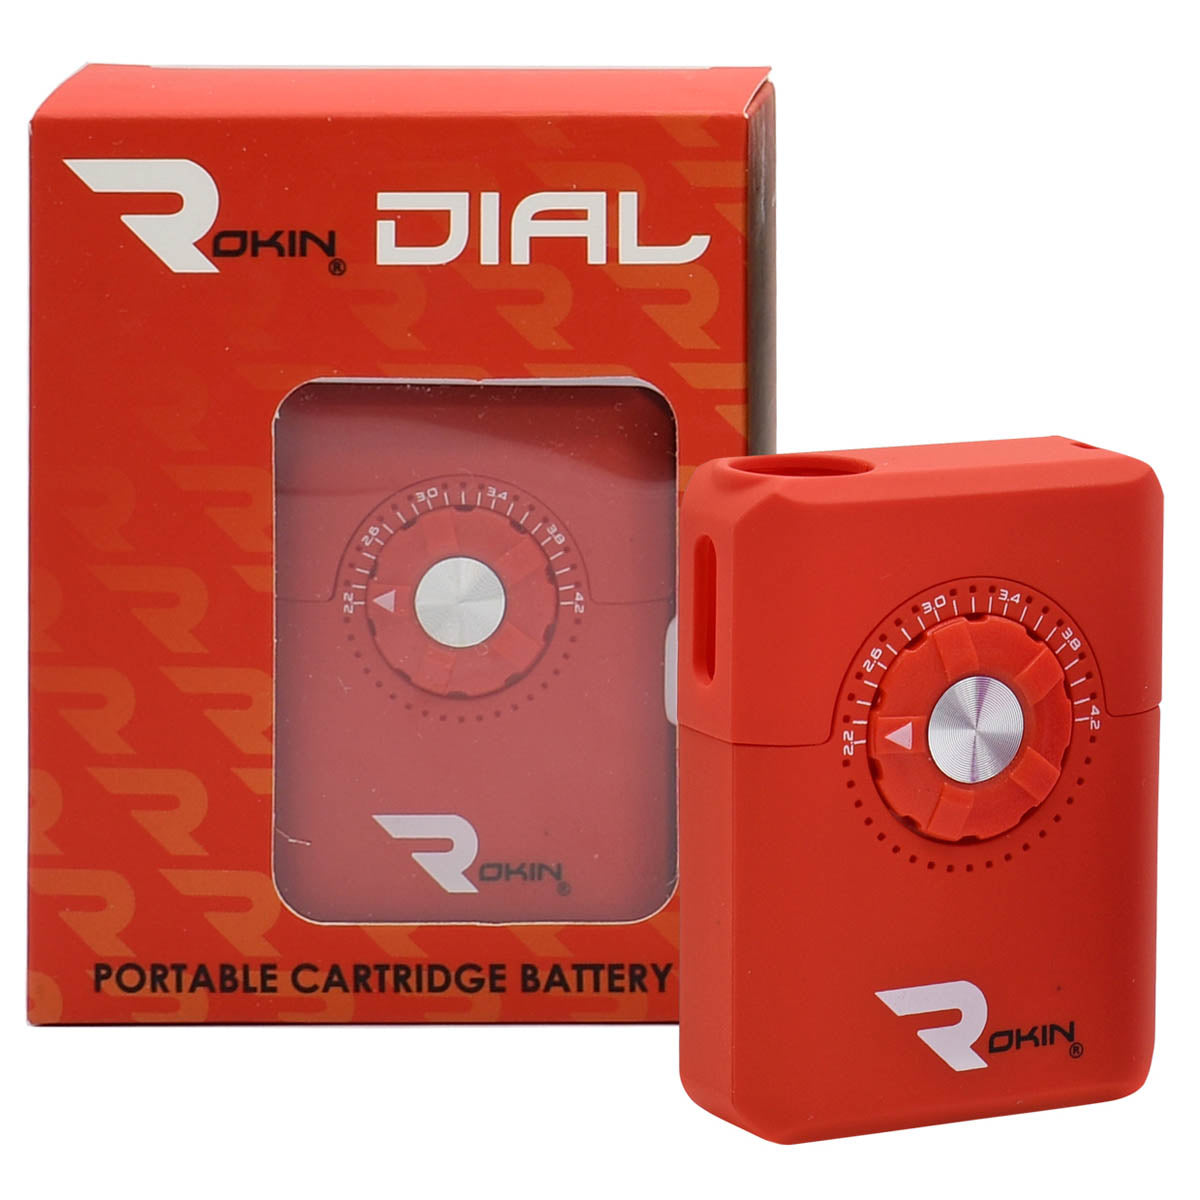 Rokin Dial 510 Cartridge Battery